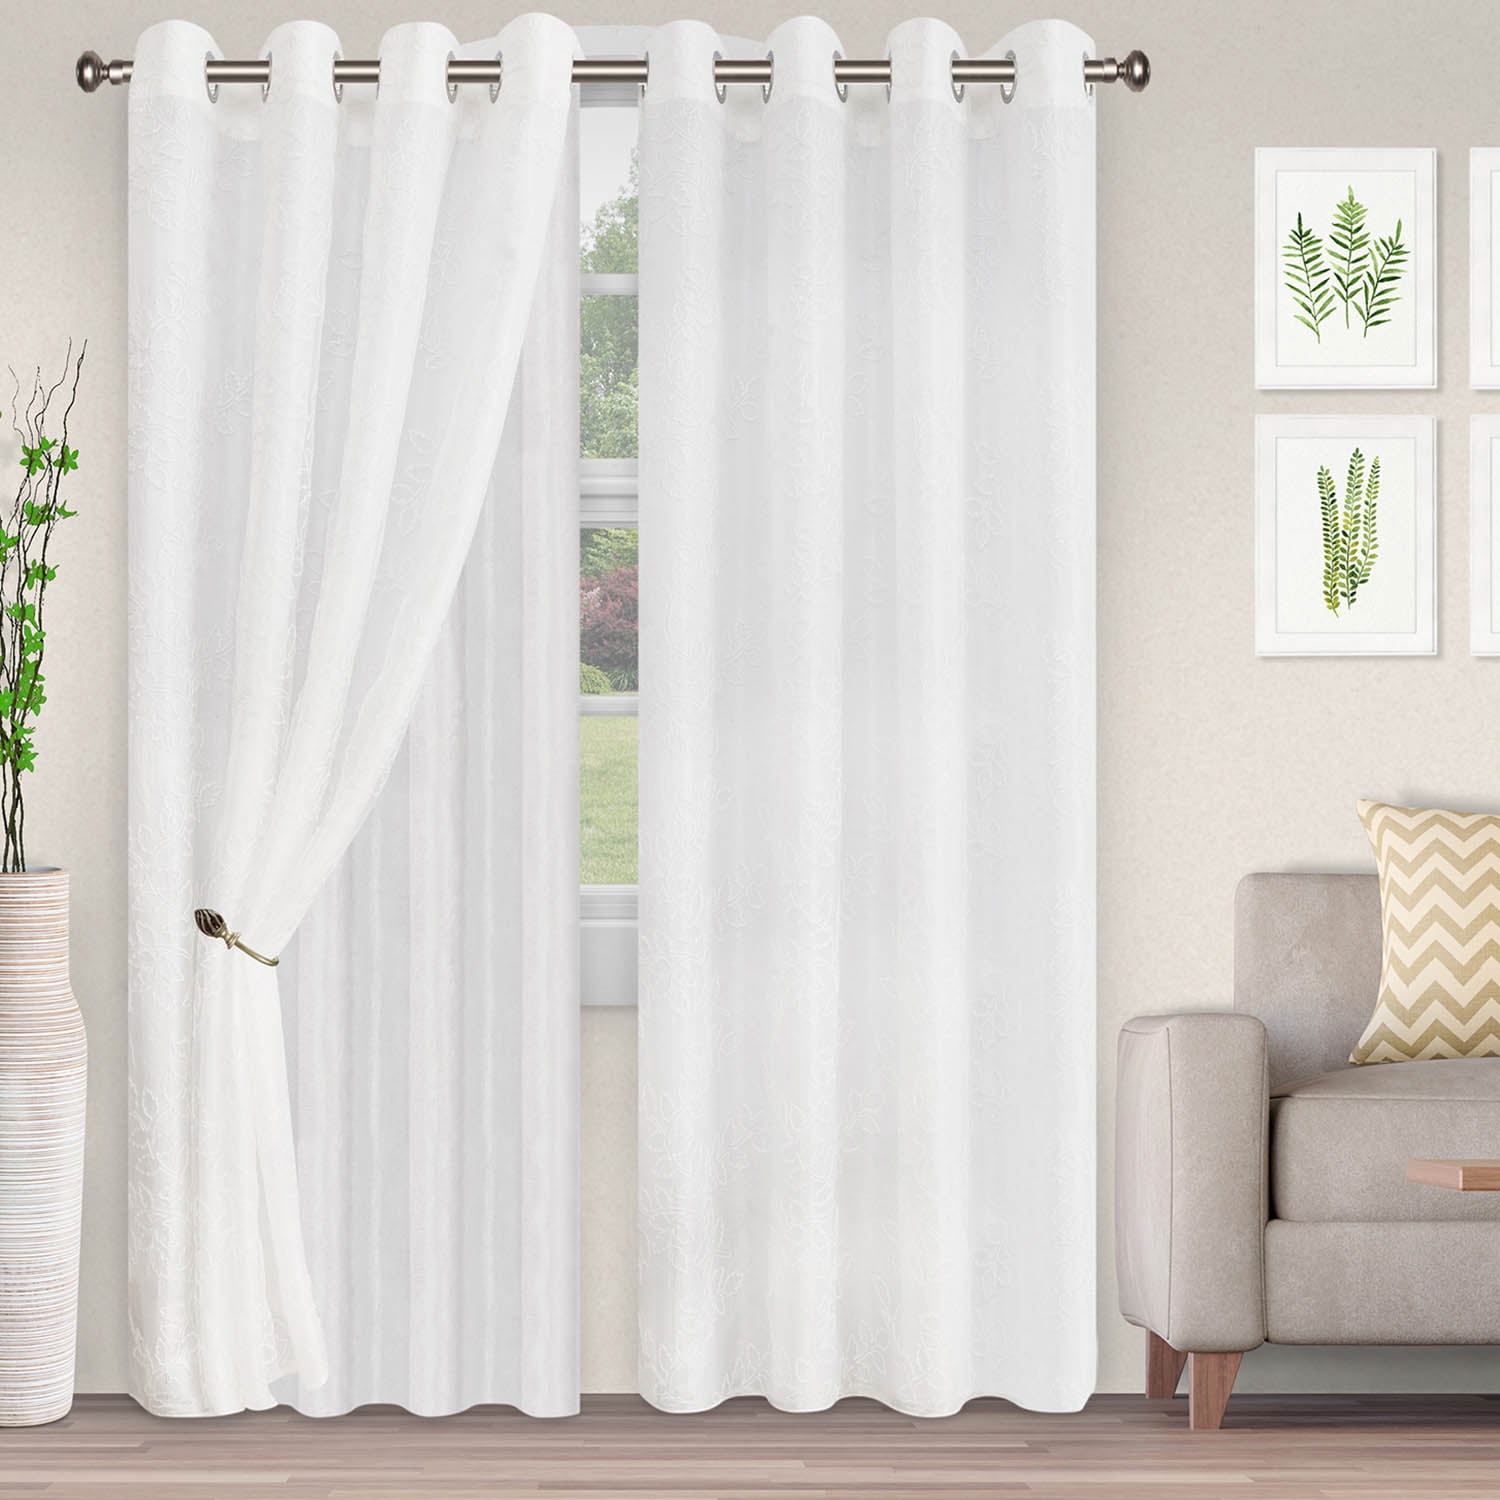 Boho Leaves Pattern Panels Sheer Curtains, 52